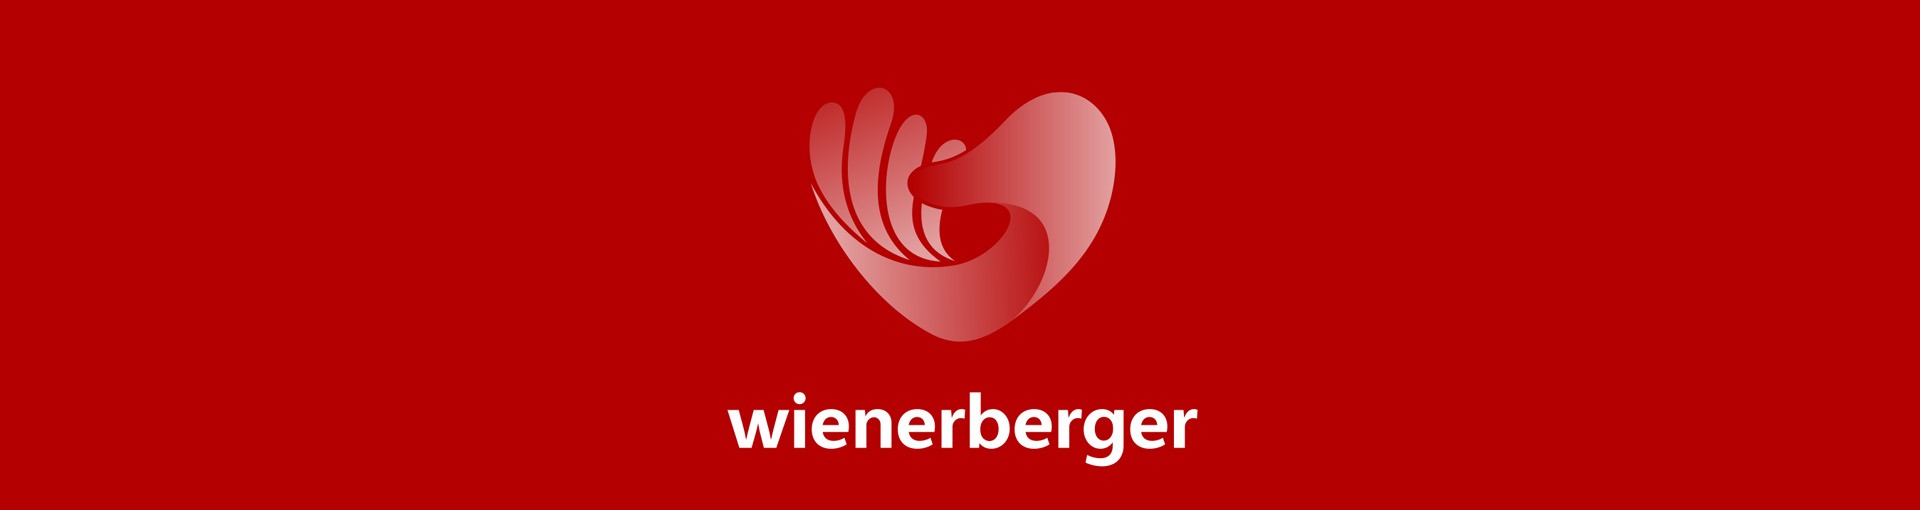 Společnost Wienerberger podporuje Ukrajinu